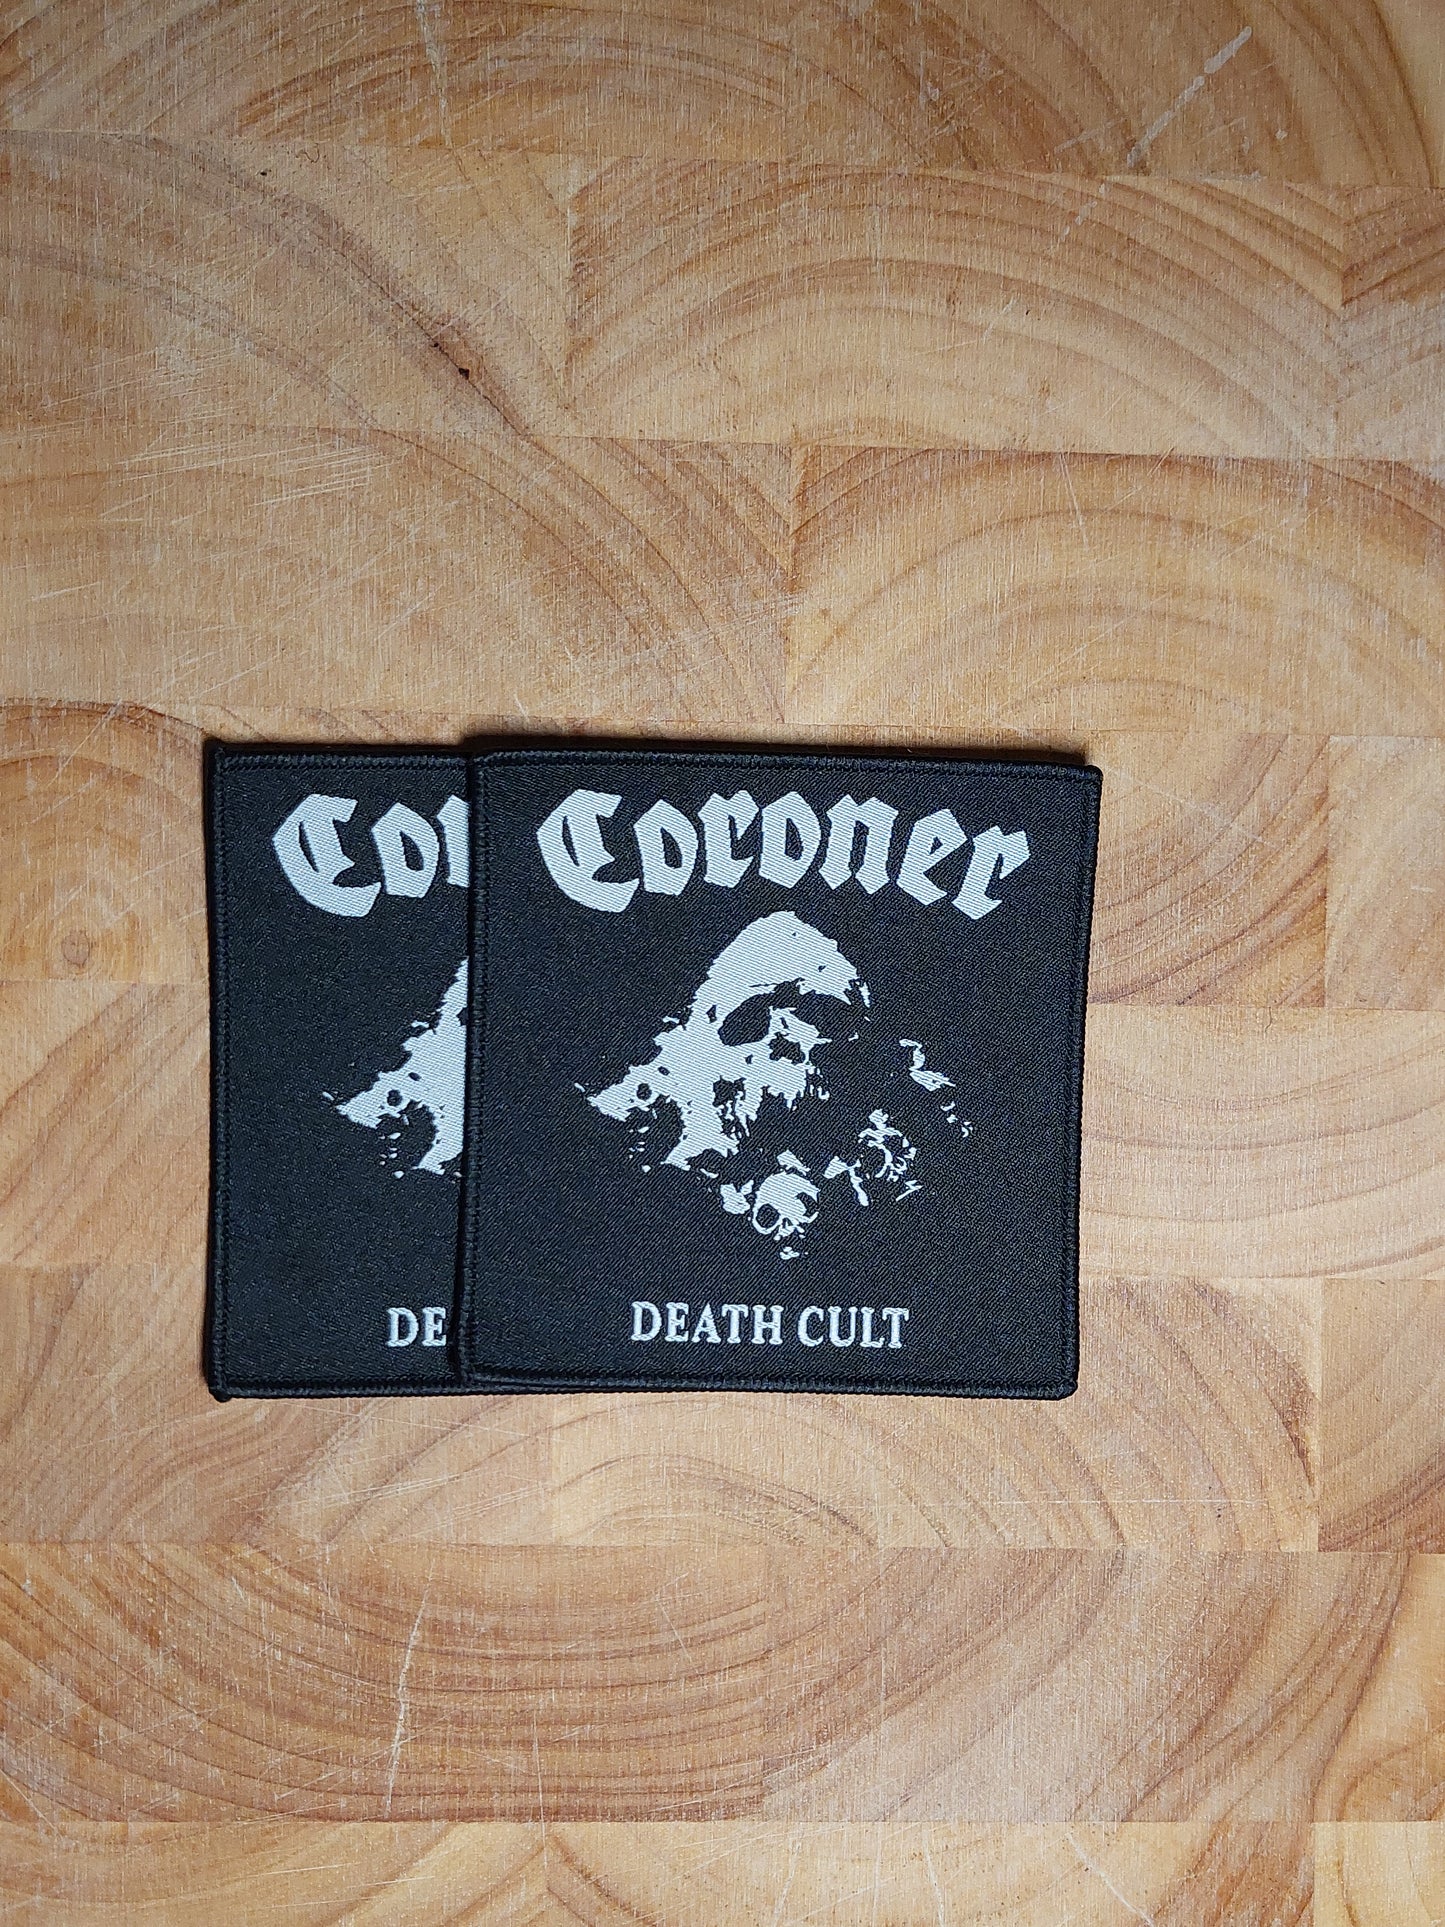 Coroner - Death cult